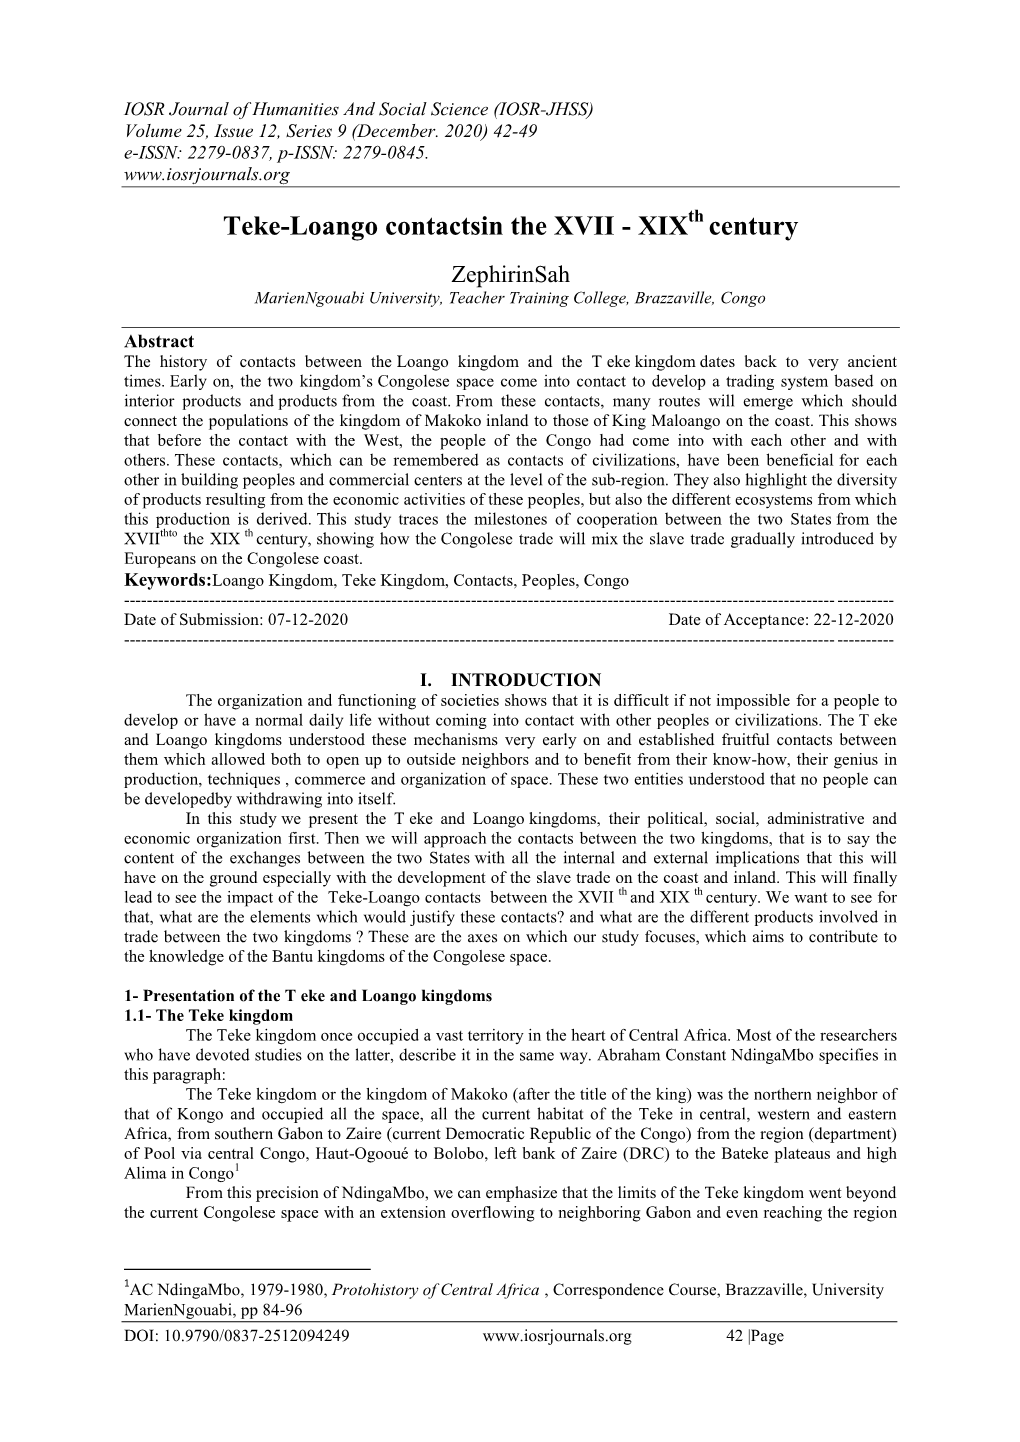 Teke-Loango Contactsin the XVII - Xixth Century